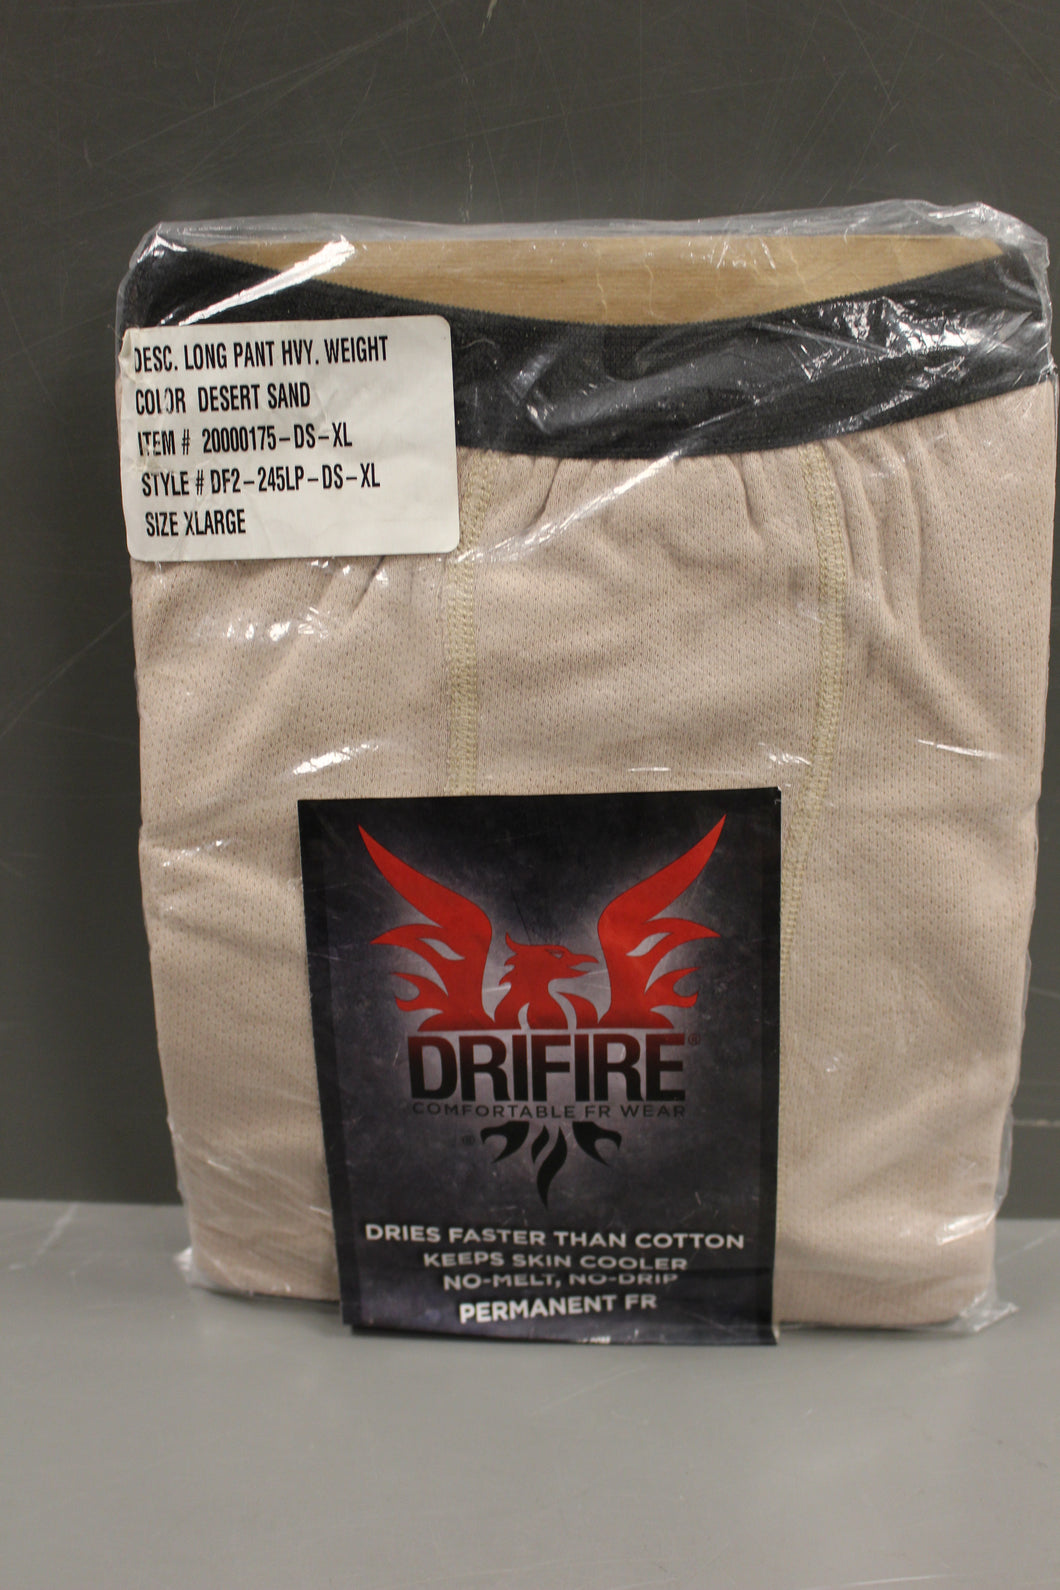 DriFire Heavyweight Long Pants - Desert Sand - Small - New (175)